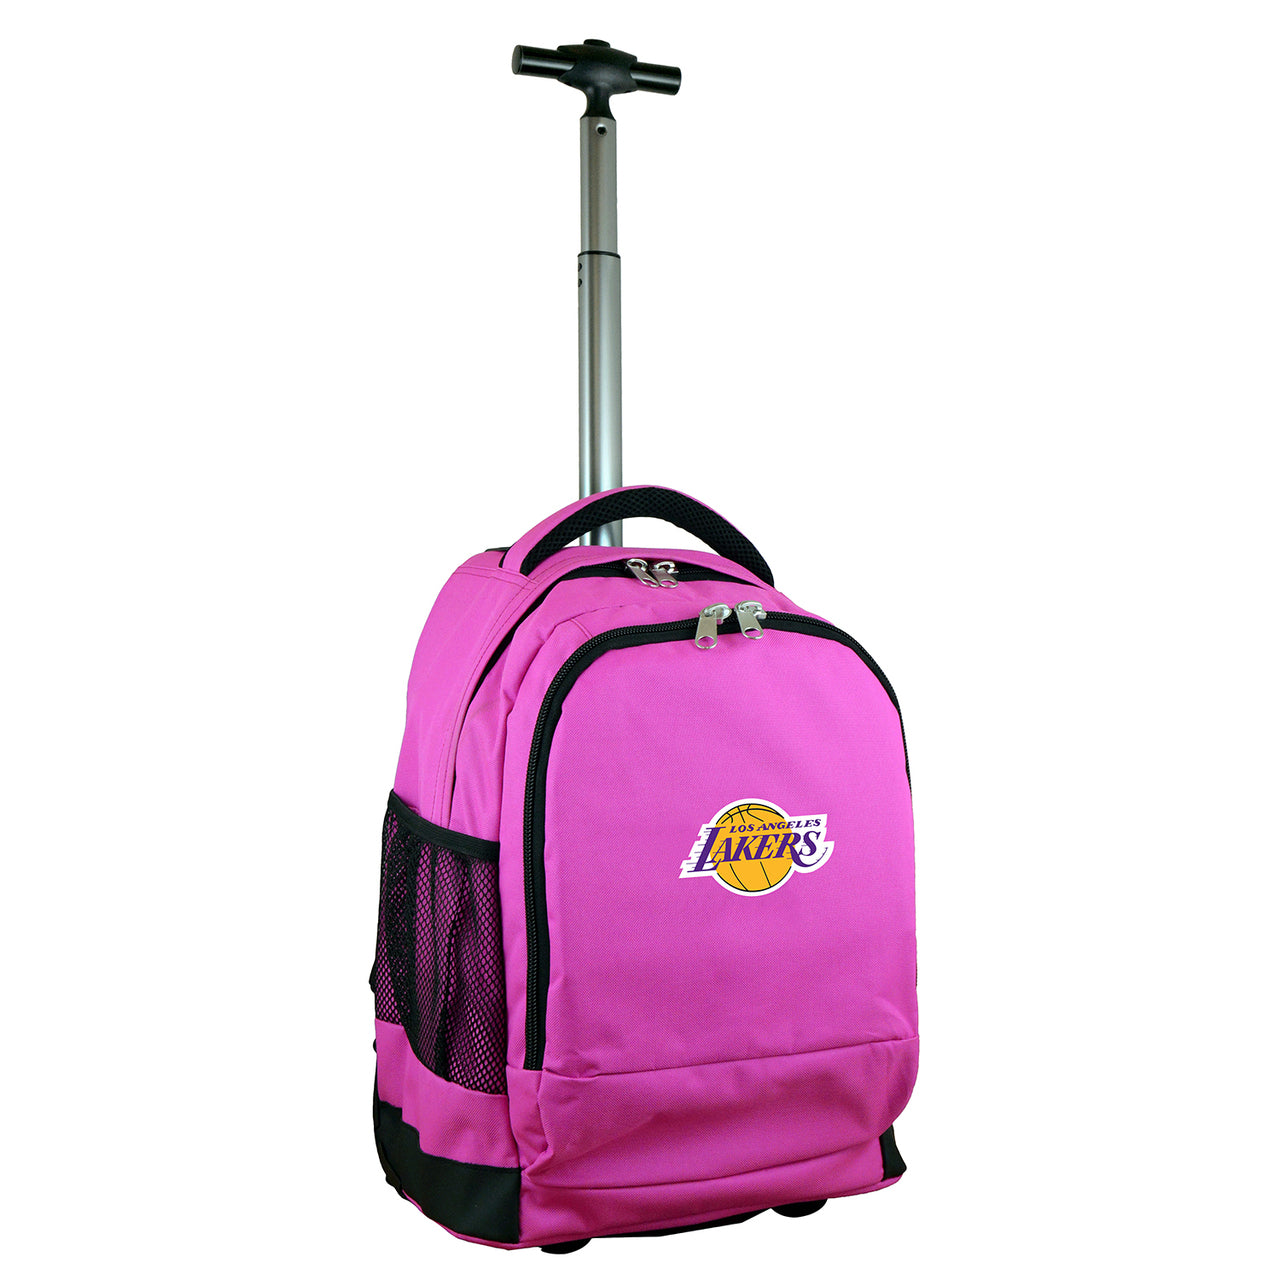 Los Angeles Lakers Premium Wheeled Backpack in Pink